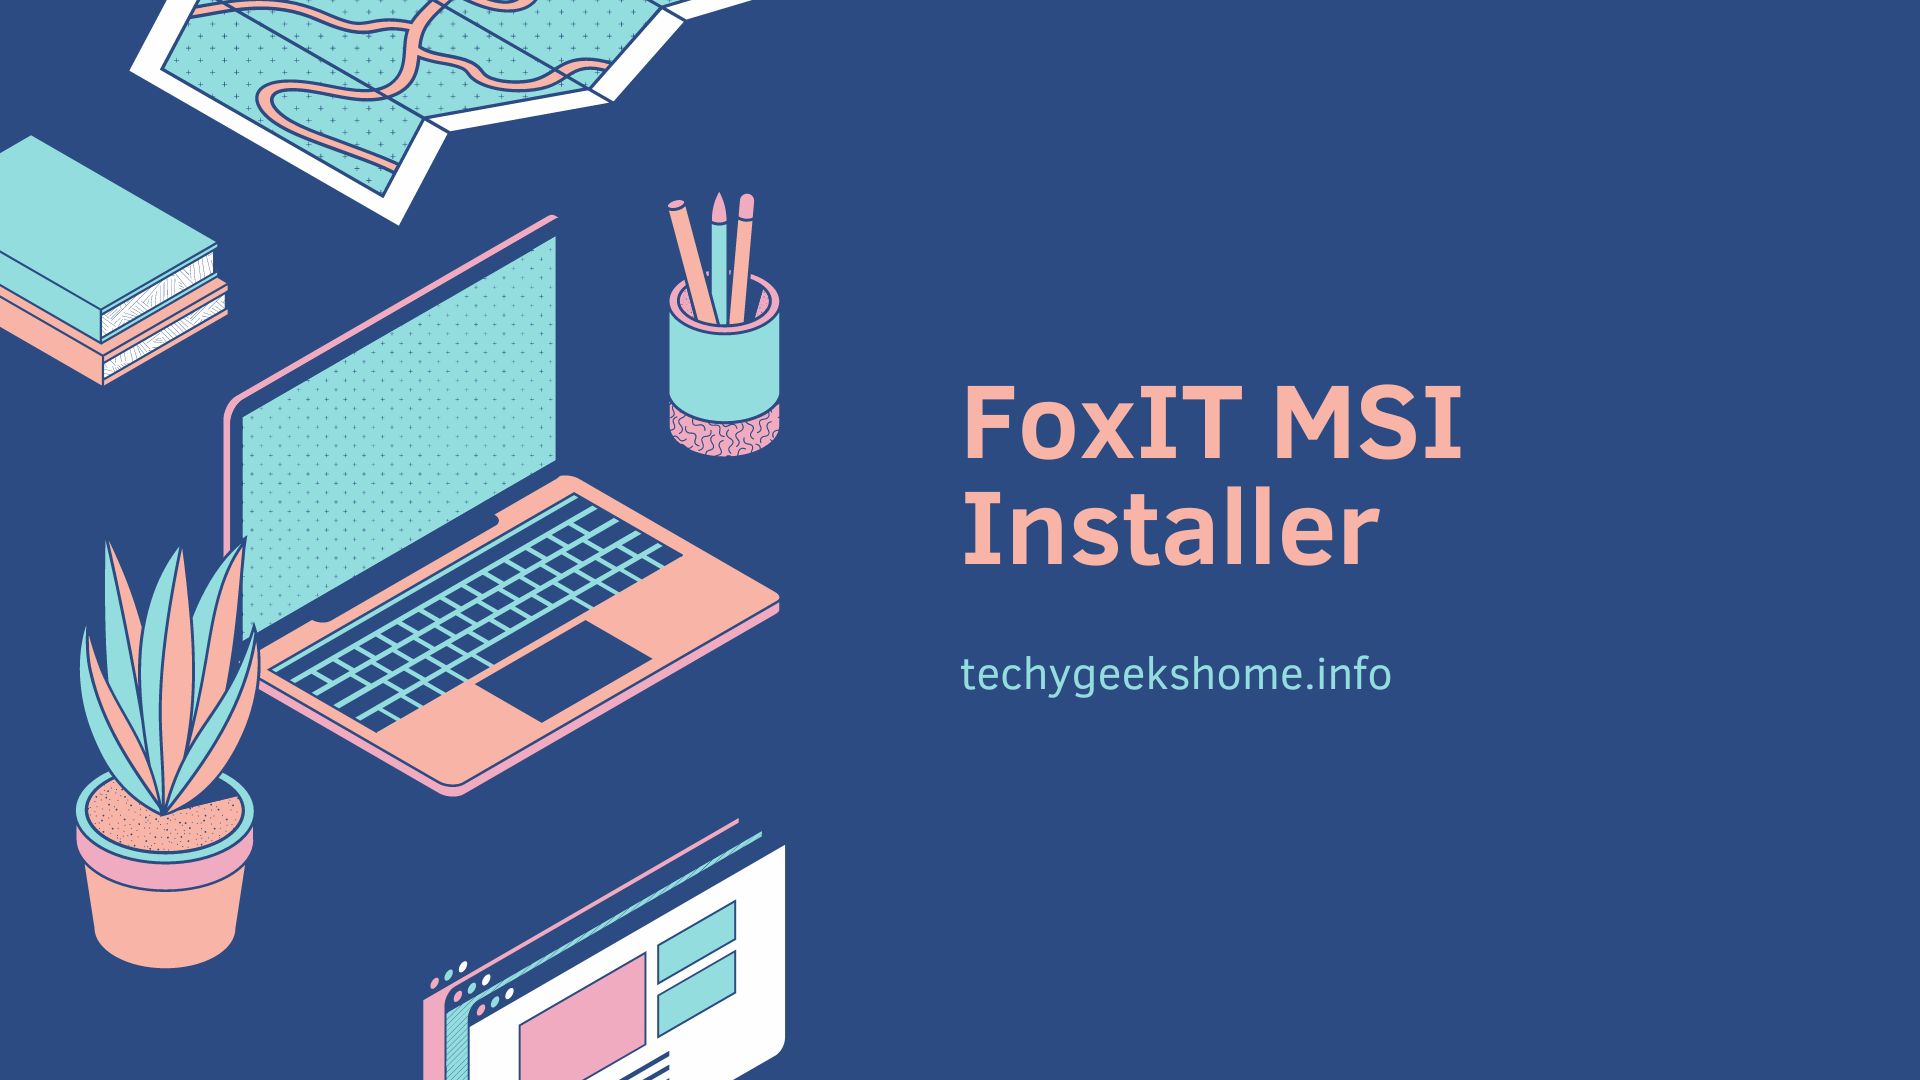 Foxit Reader v2024.1 MSI Installer and Instructions